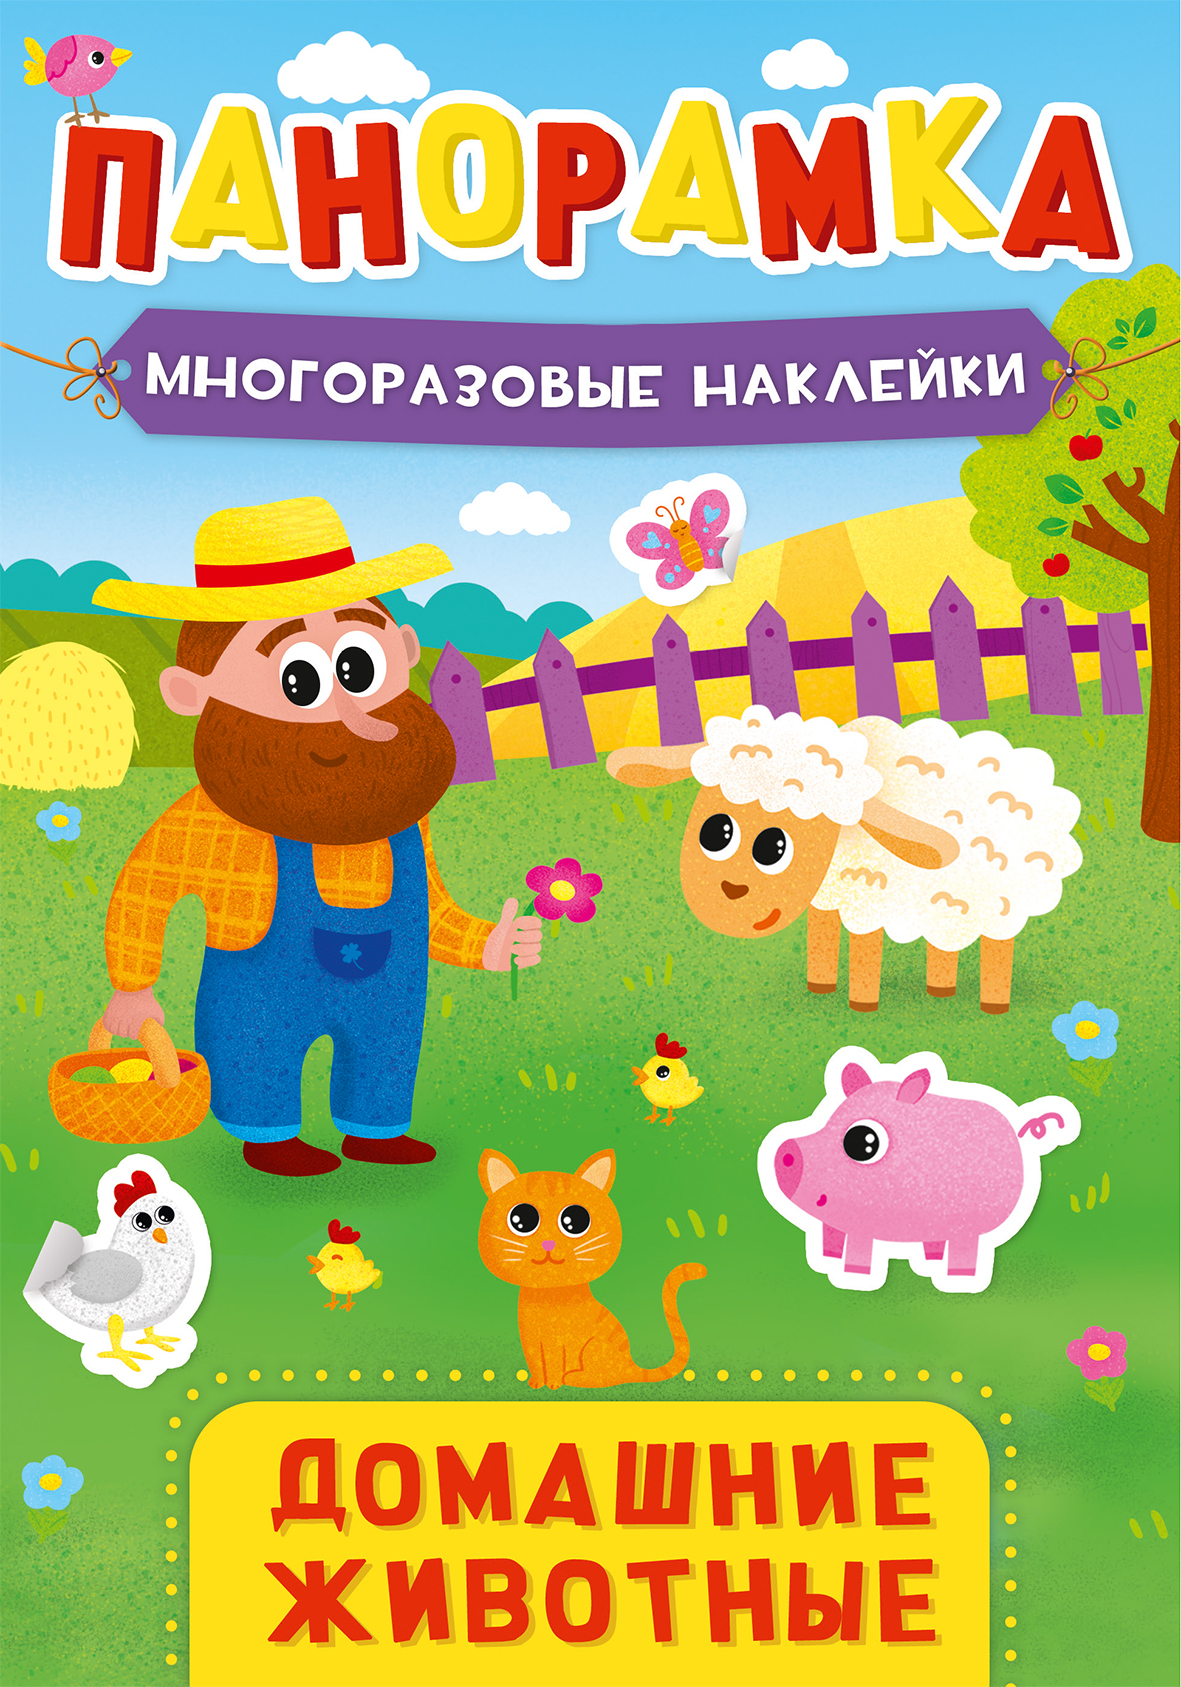 Домашние животные. Панорамка с многоразовыми наклейками книжка панорамка с наклейками на ферме